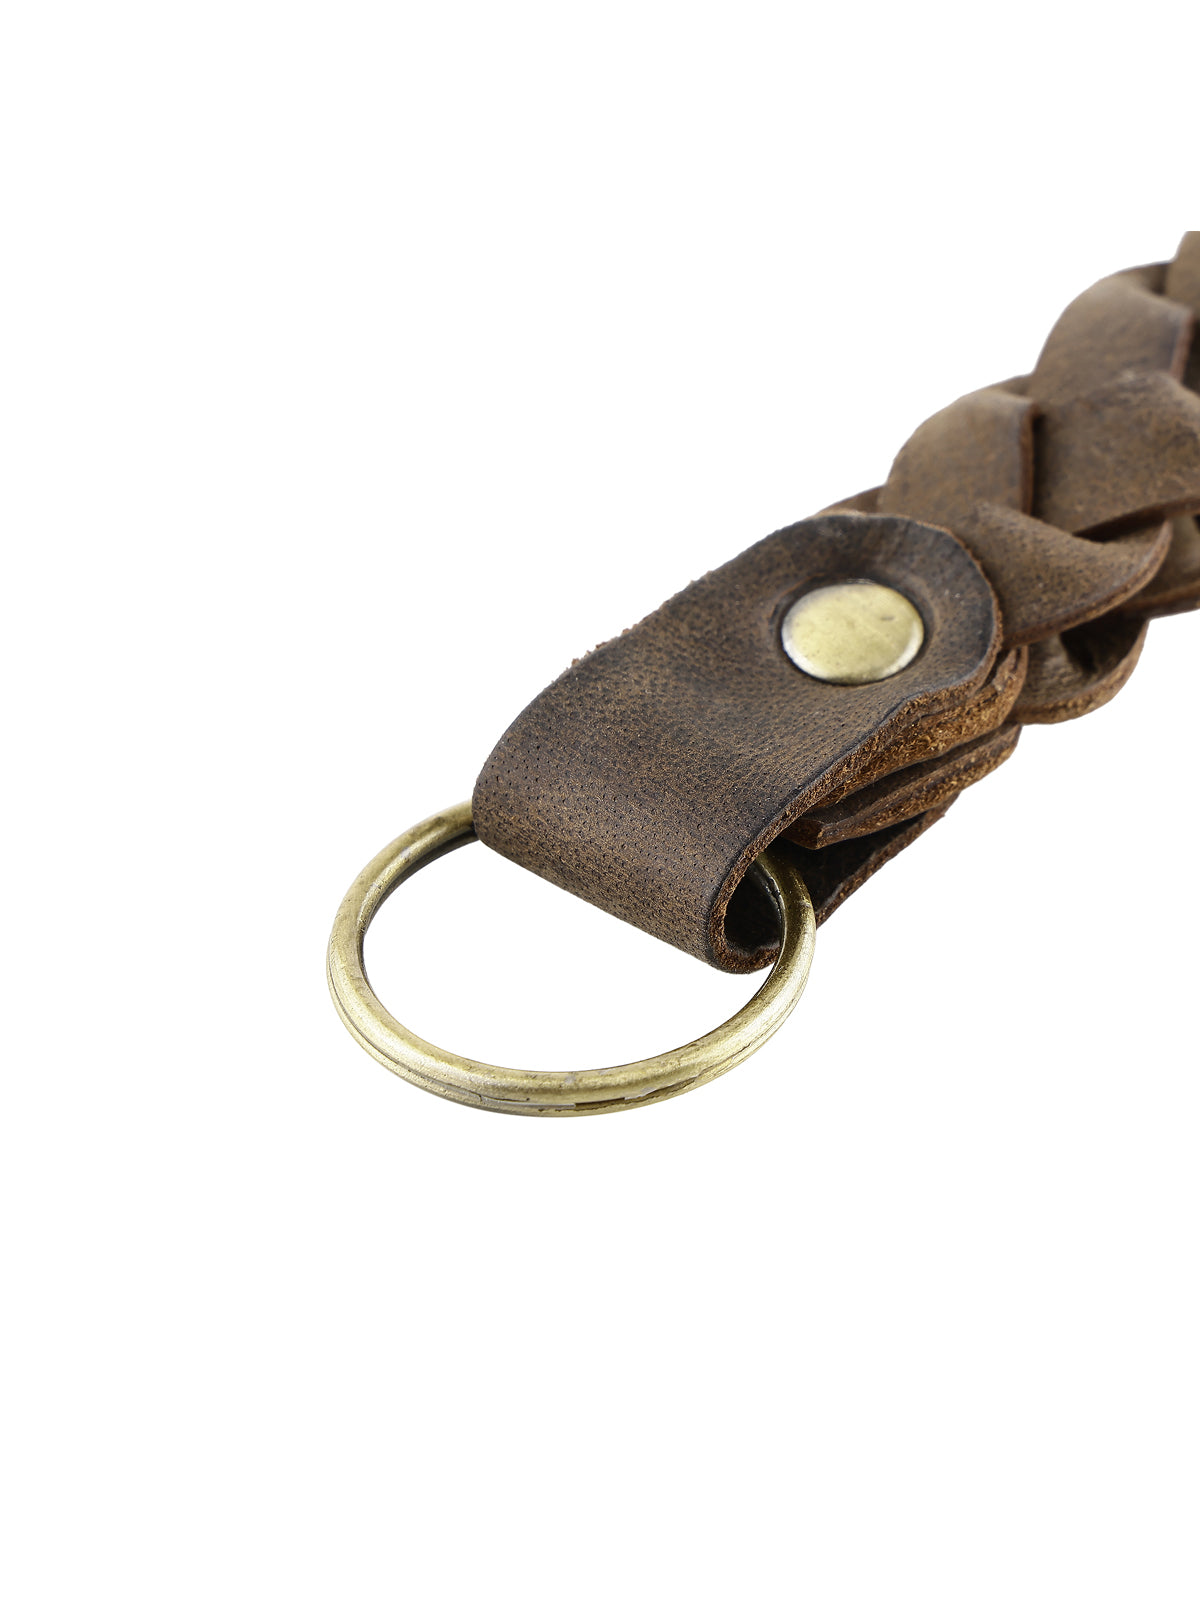 Genunie Leather Braided with Key Ring Anti-Rust - Brown